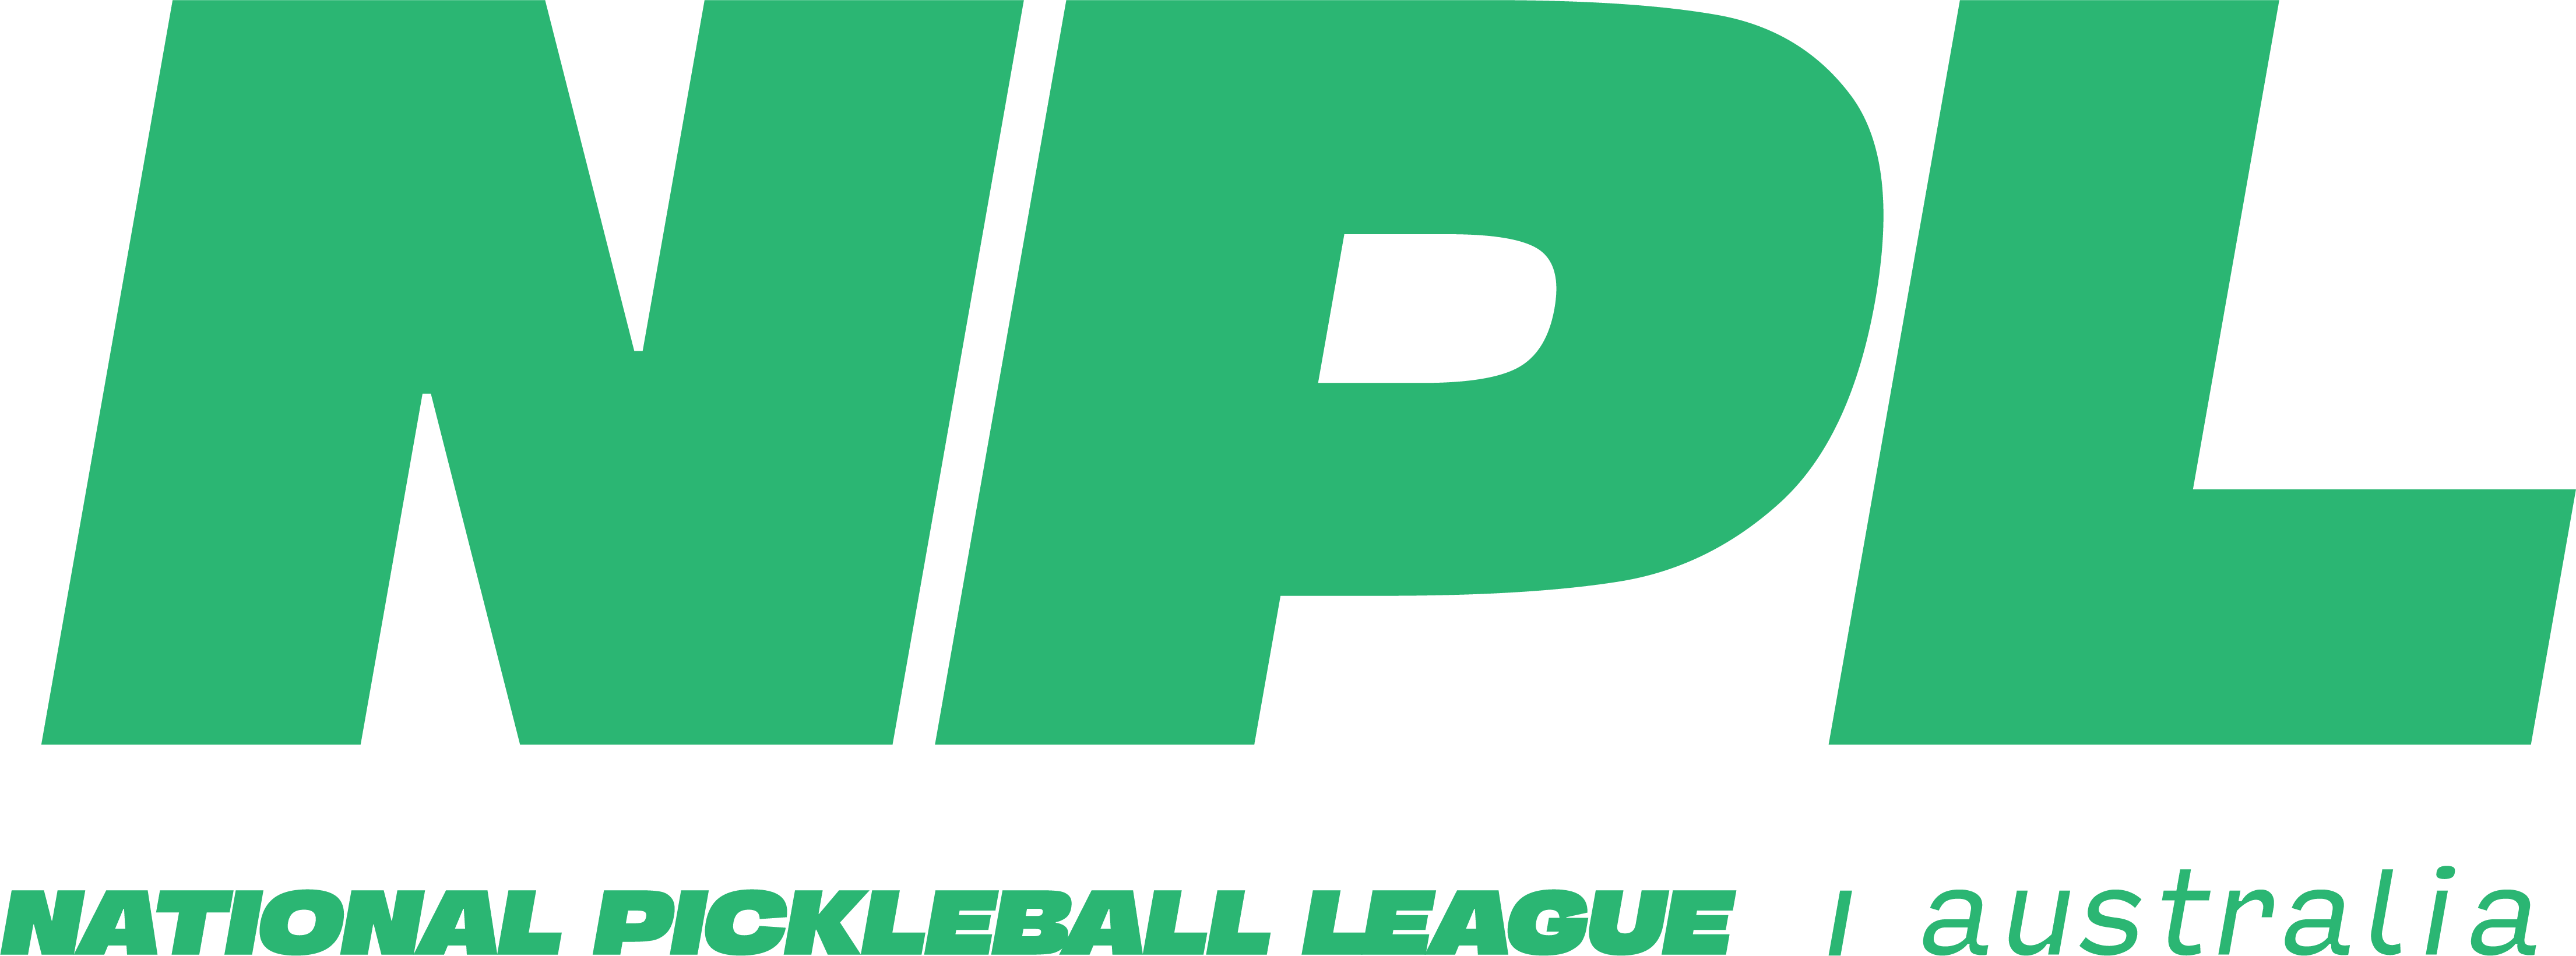 National Pickleball League